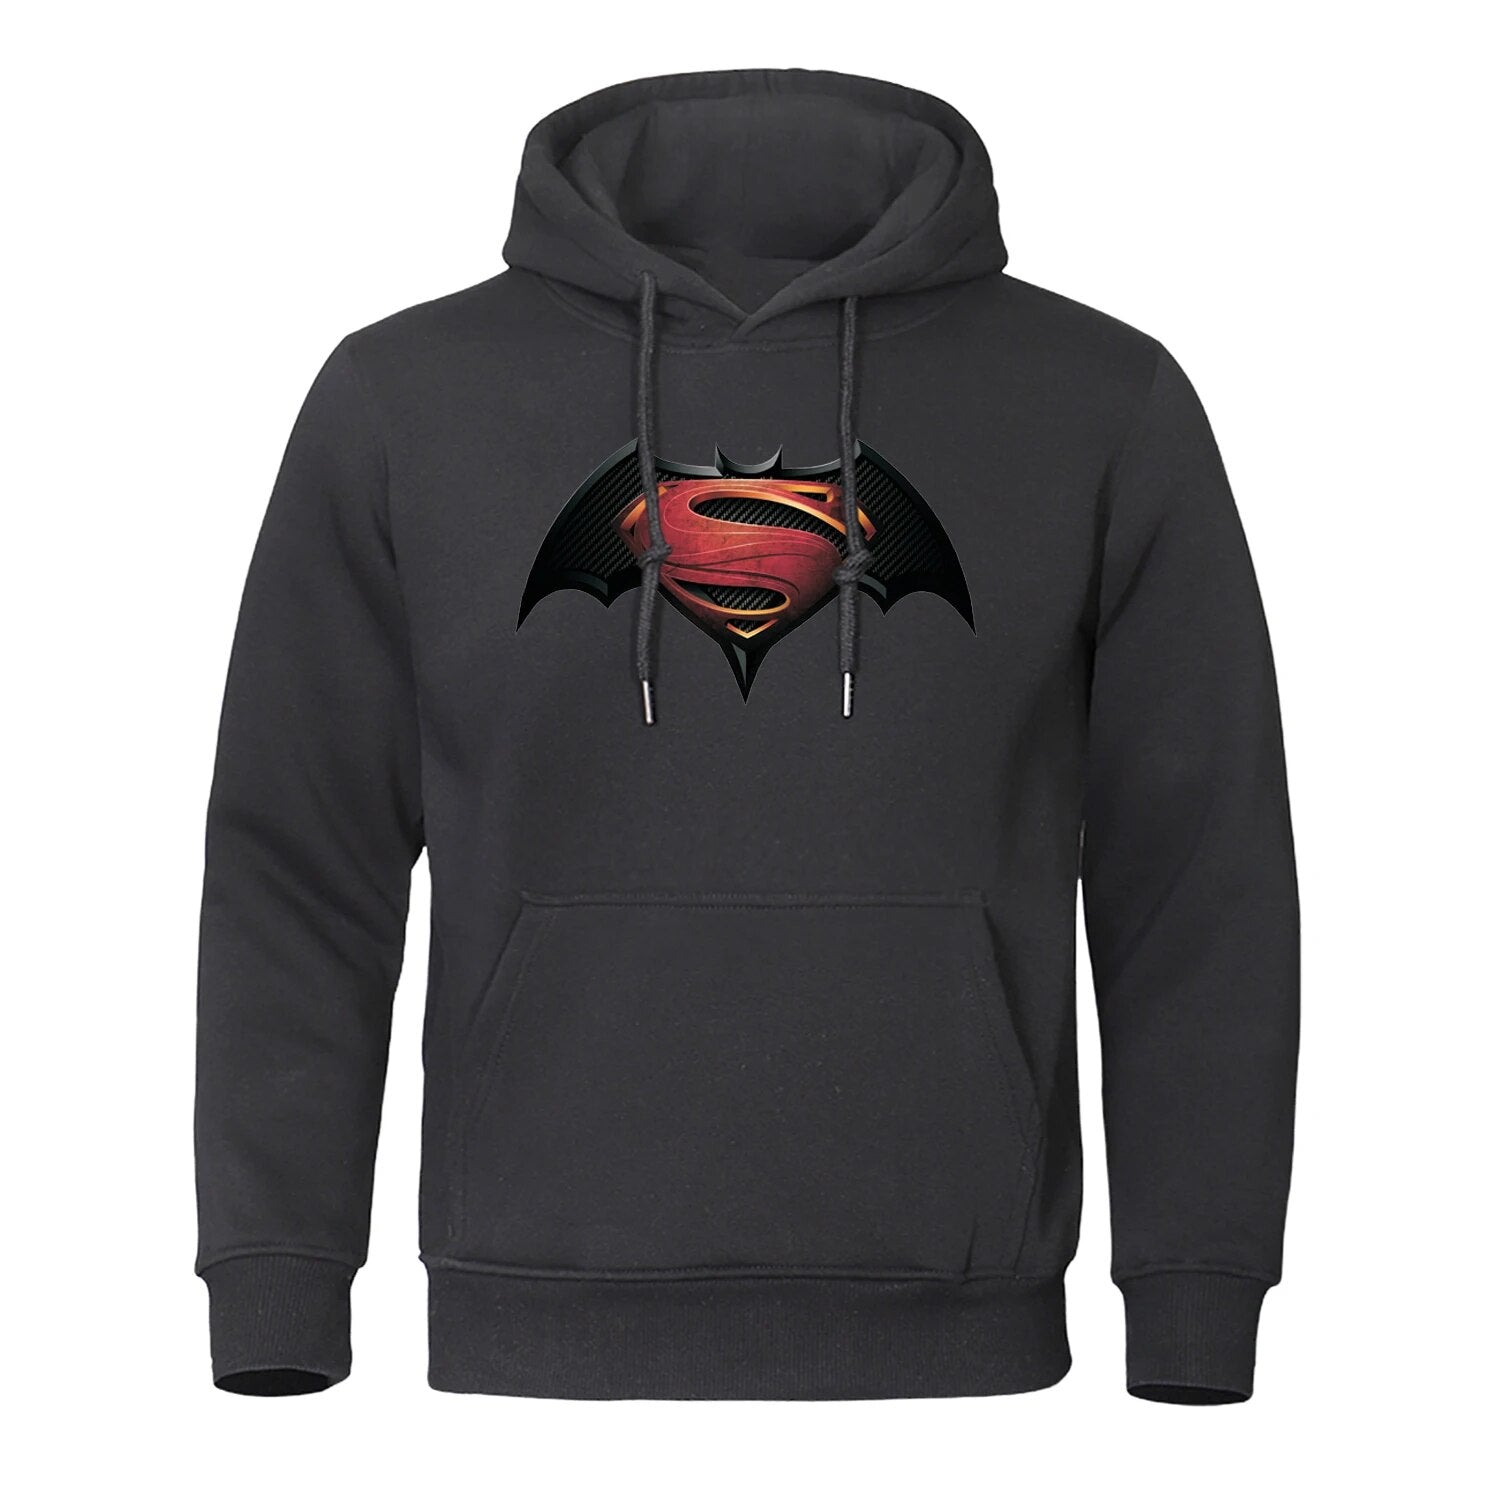 Superman / Batman - Super-Bat Hoodie - Men's Casual Streetwear-Black1-S-